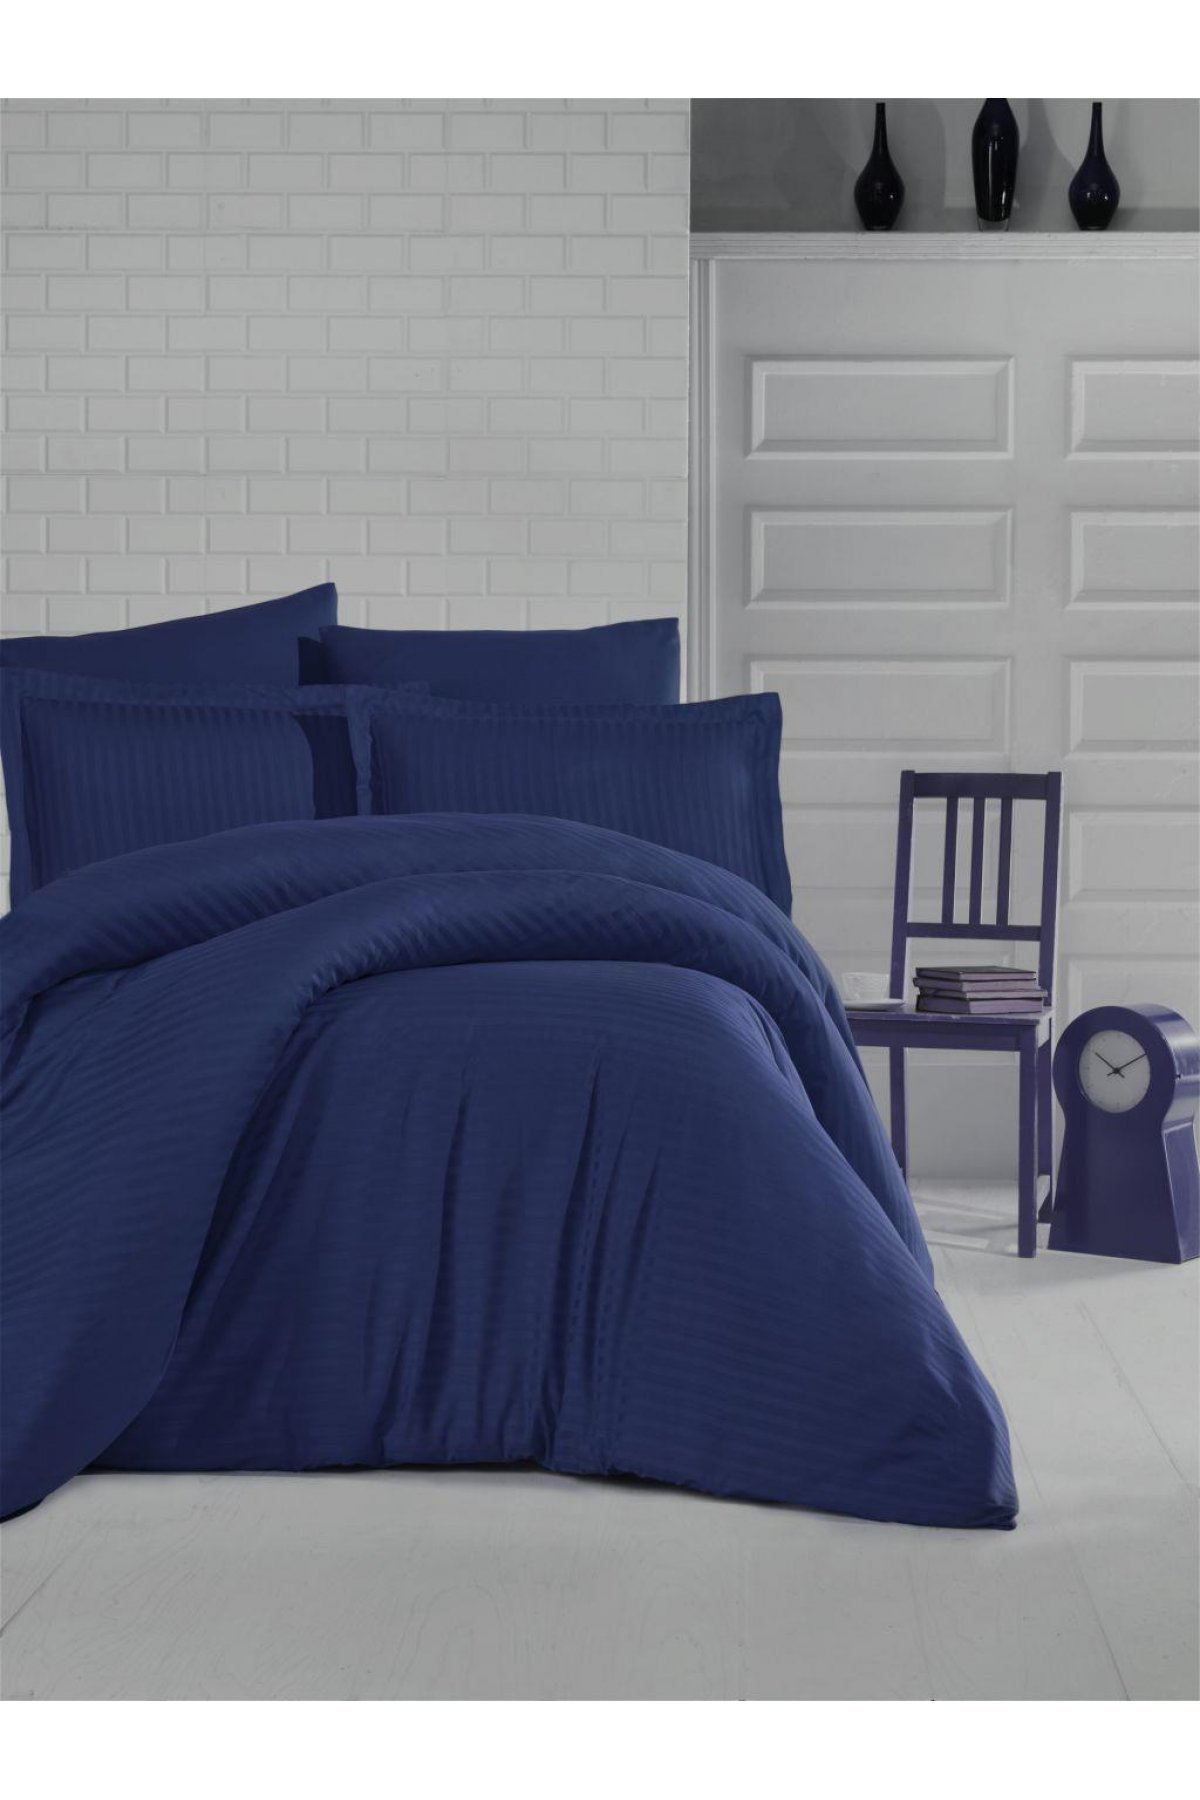 Bedding-Bright Blue